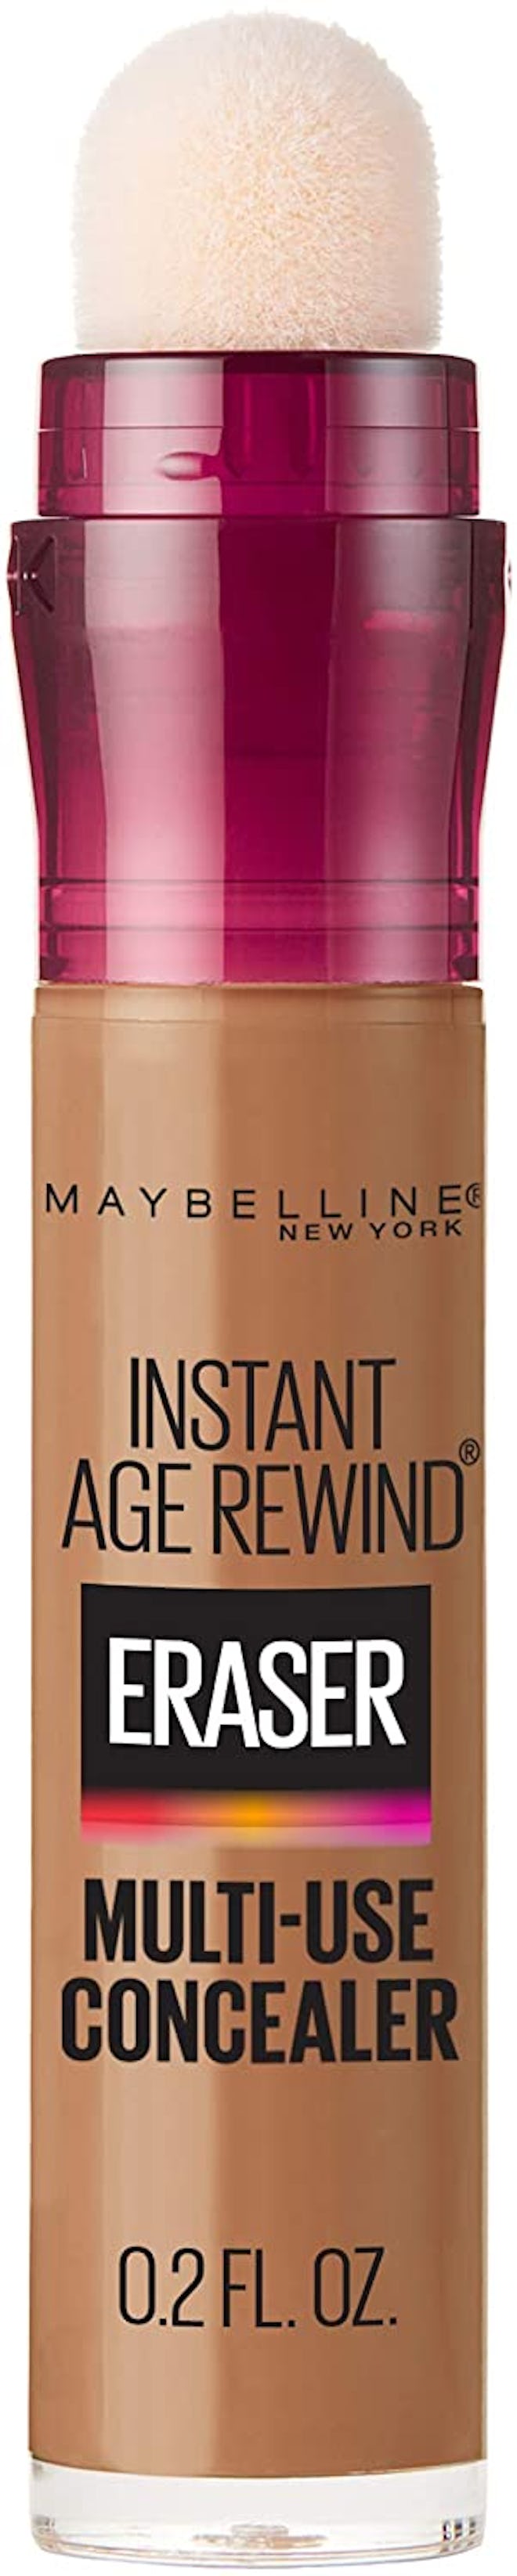 Maybelline Instant Age Rewind Multi-Use Concealer